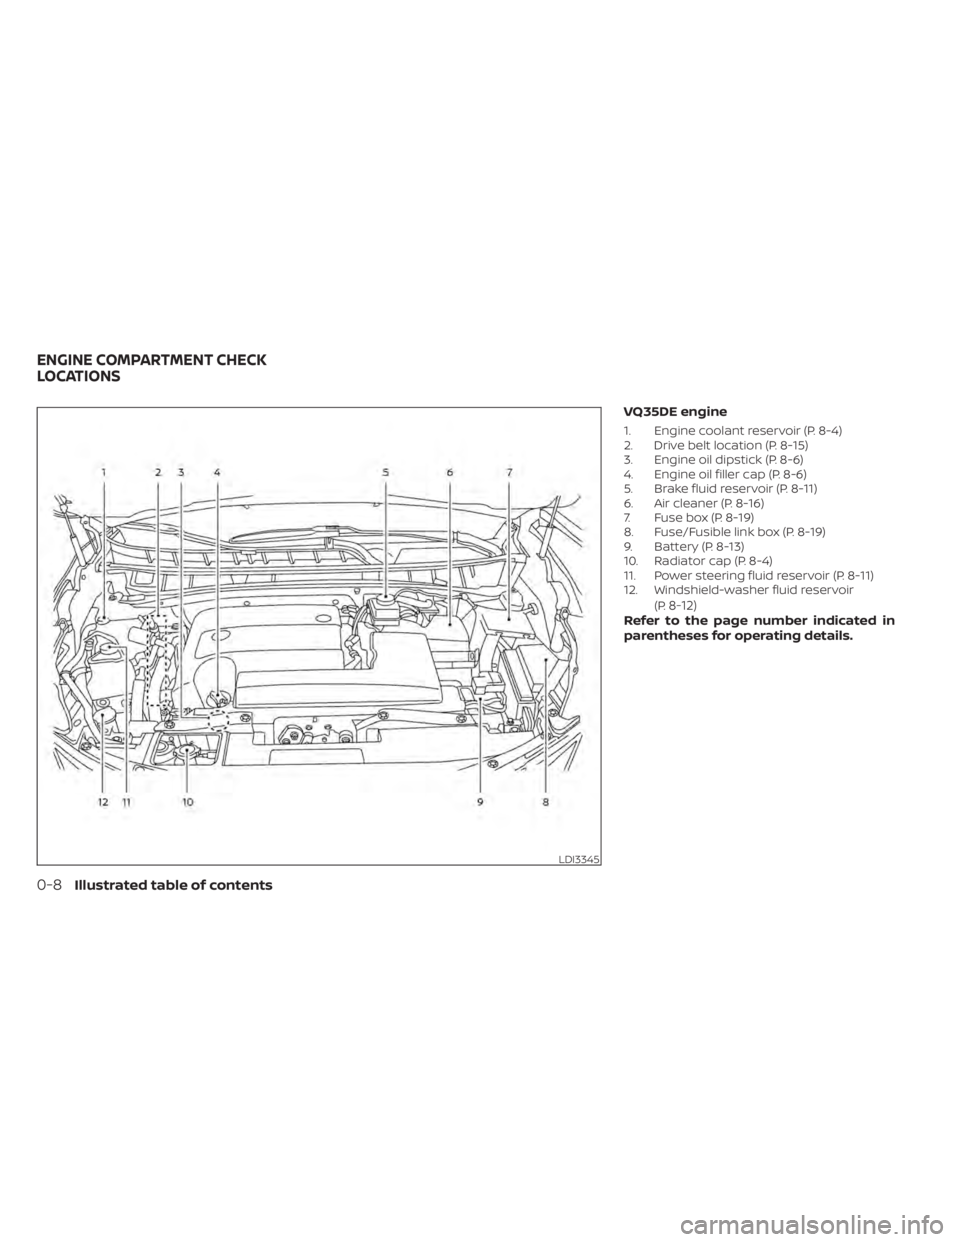 NISSAN MURANO 2020  Owner´s Manual VQ35DE engine
1. Engine coolant reservoir (P. 8-4)
2. Drive belt location (P. 8-15)
3. Engine oil dipstick (P. 8-6)
4. Engine oil filler cap (P. 8-6)
5. Brake fluid reservoir (P. 8-11)
6. Air cleaner 